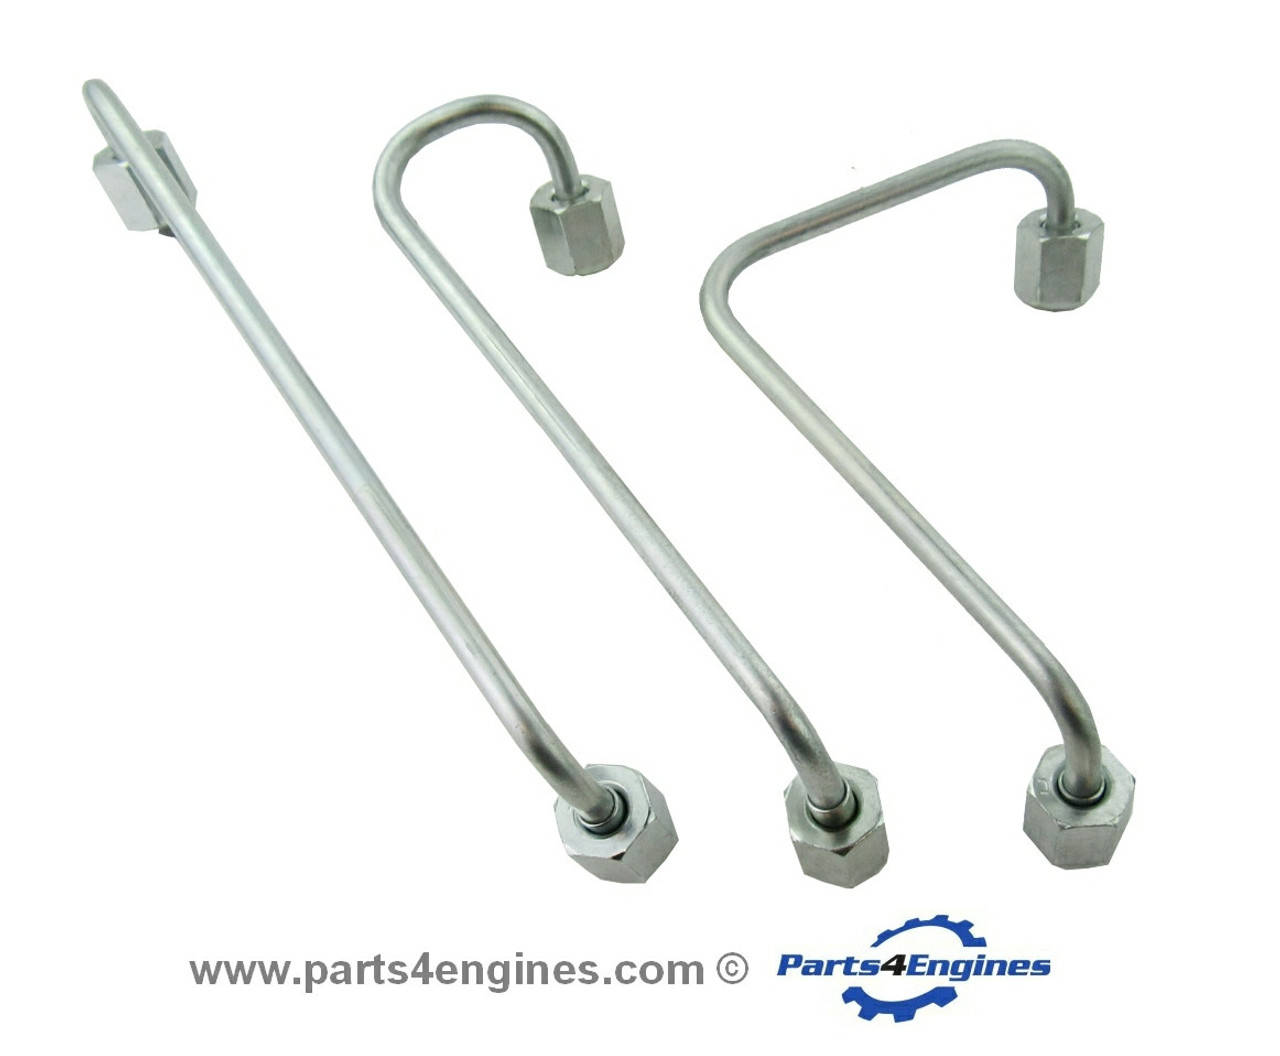 Perkins Perama M25 Injector Pipe set - parts4engines.com